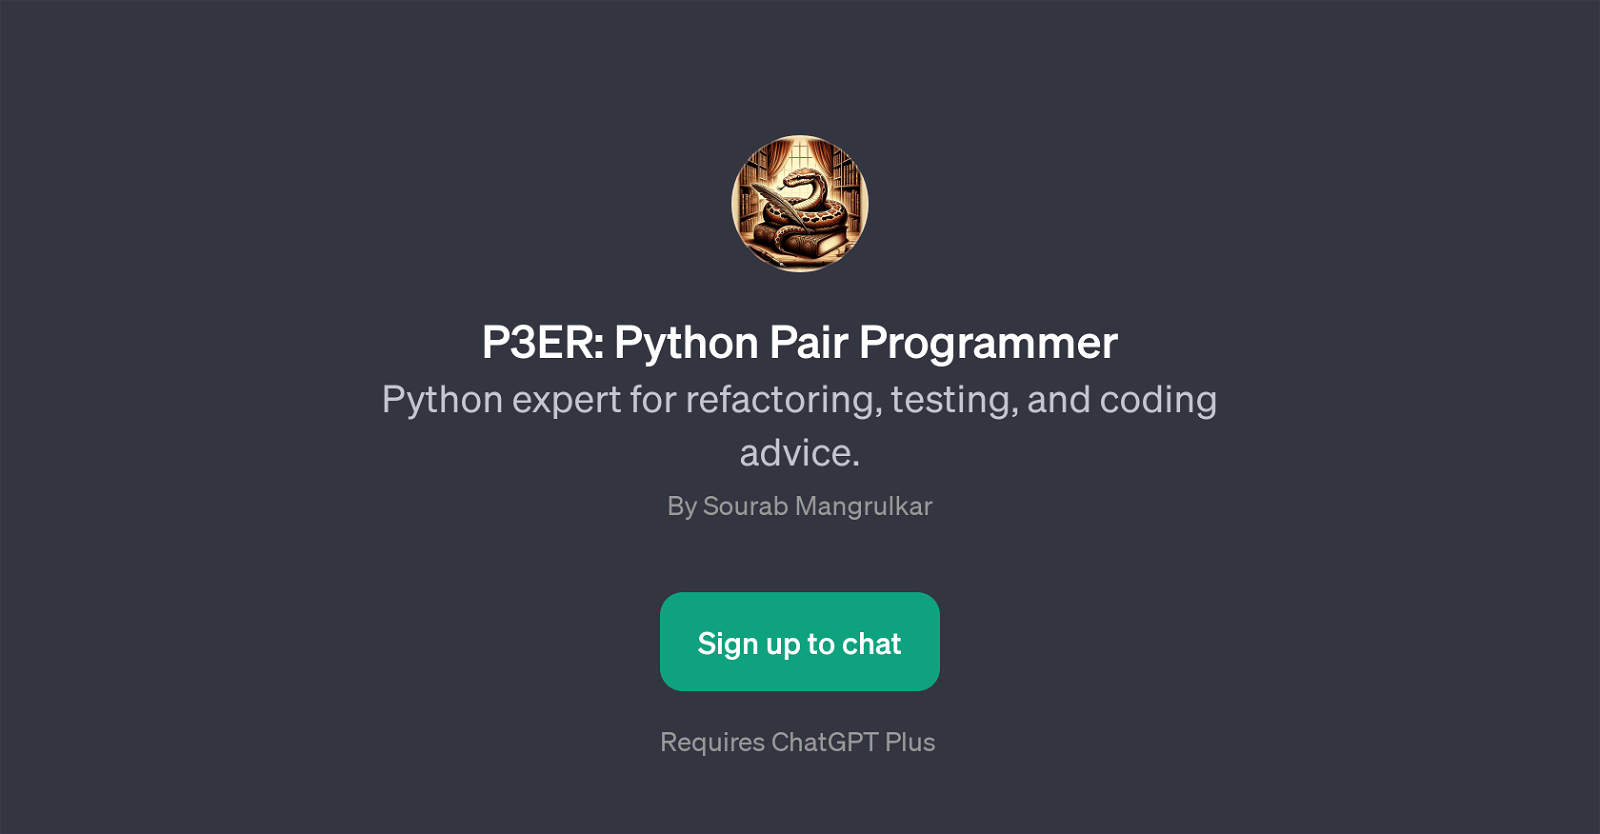 P3ER: Python Pair Programmer website